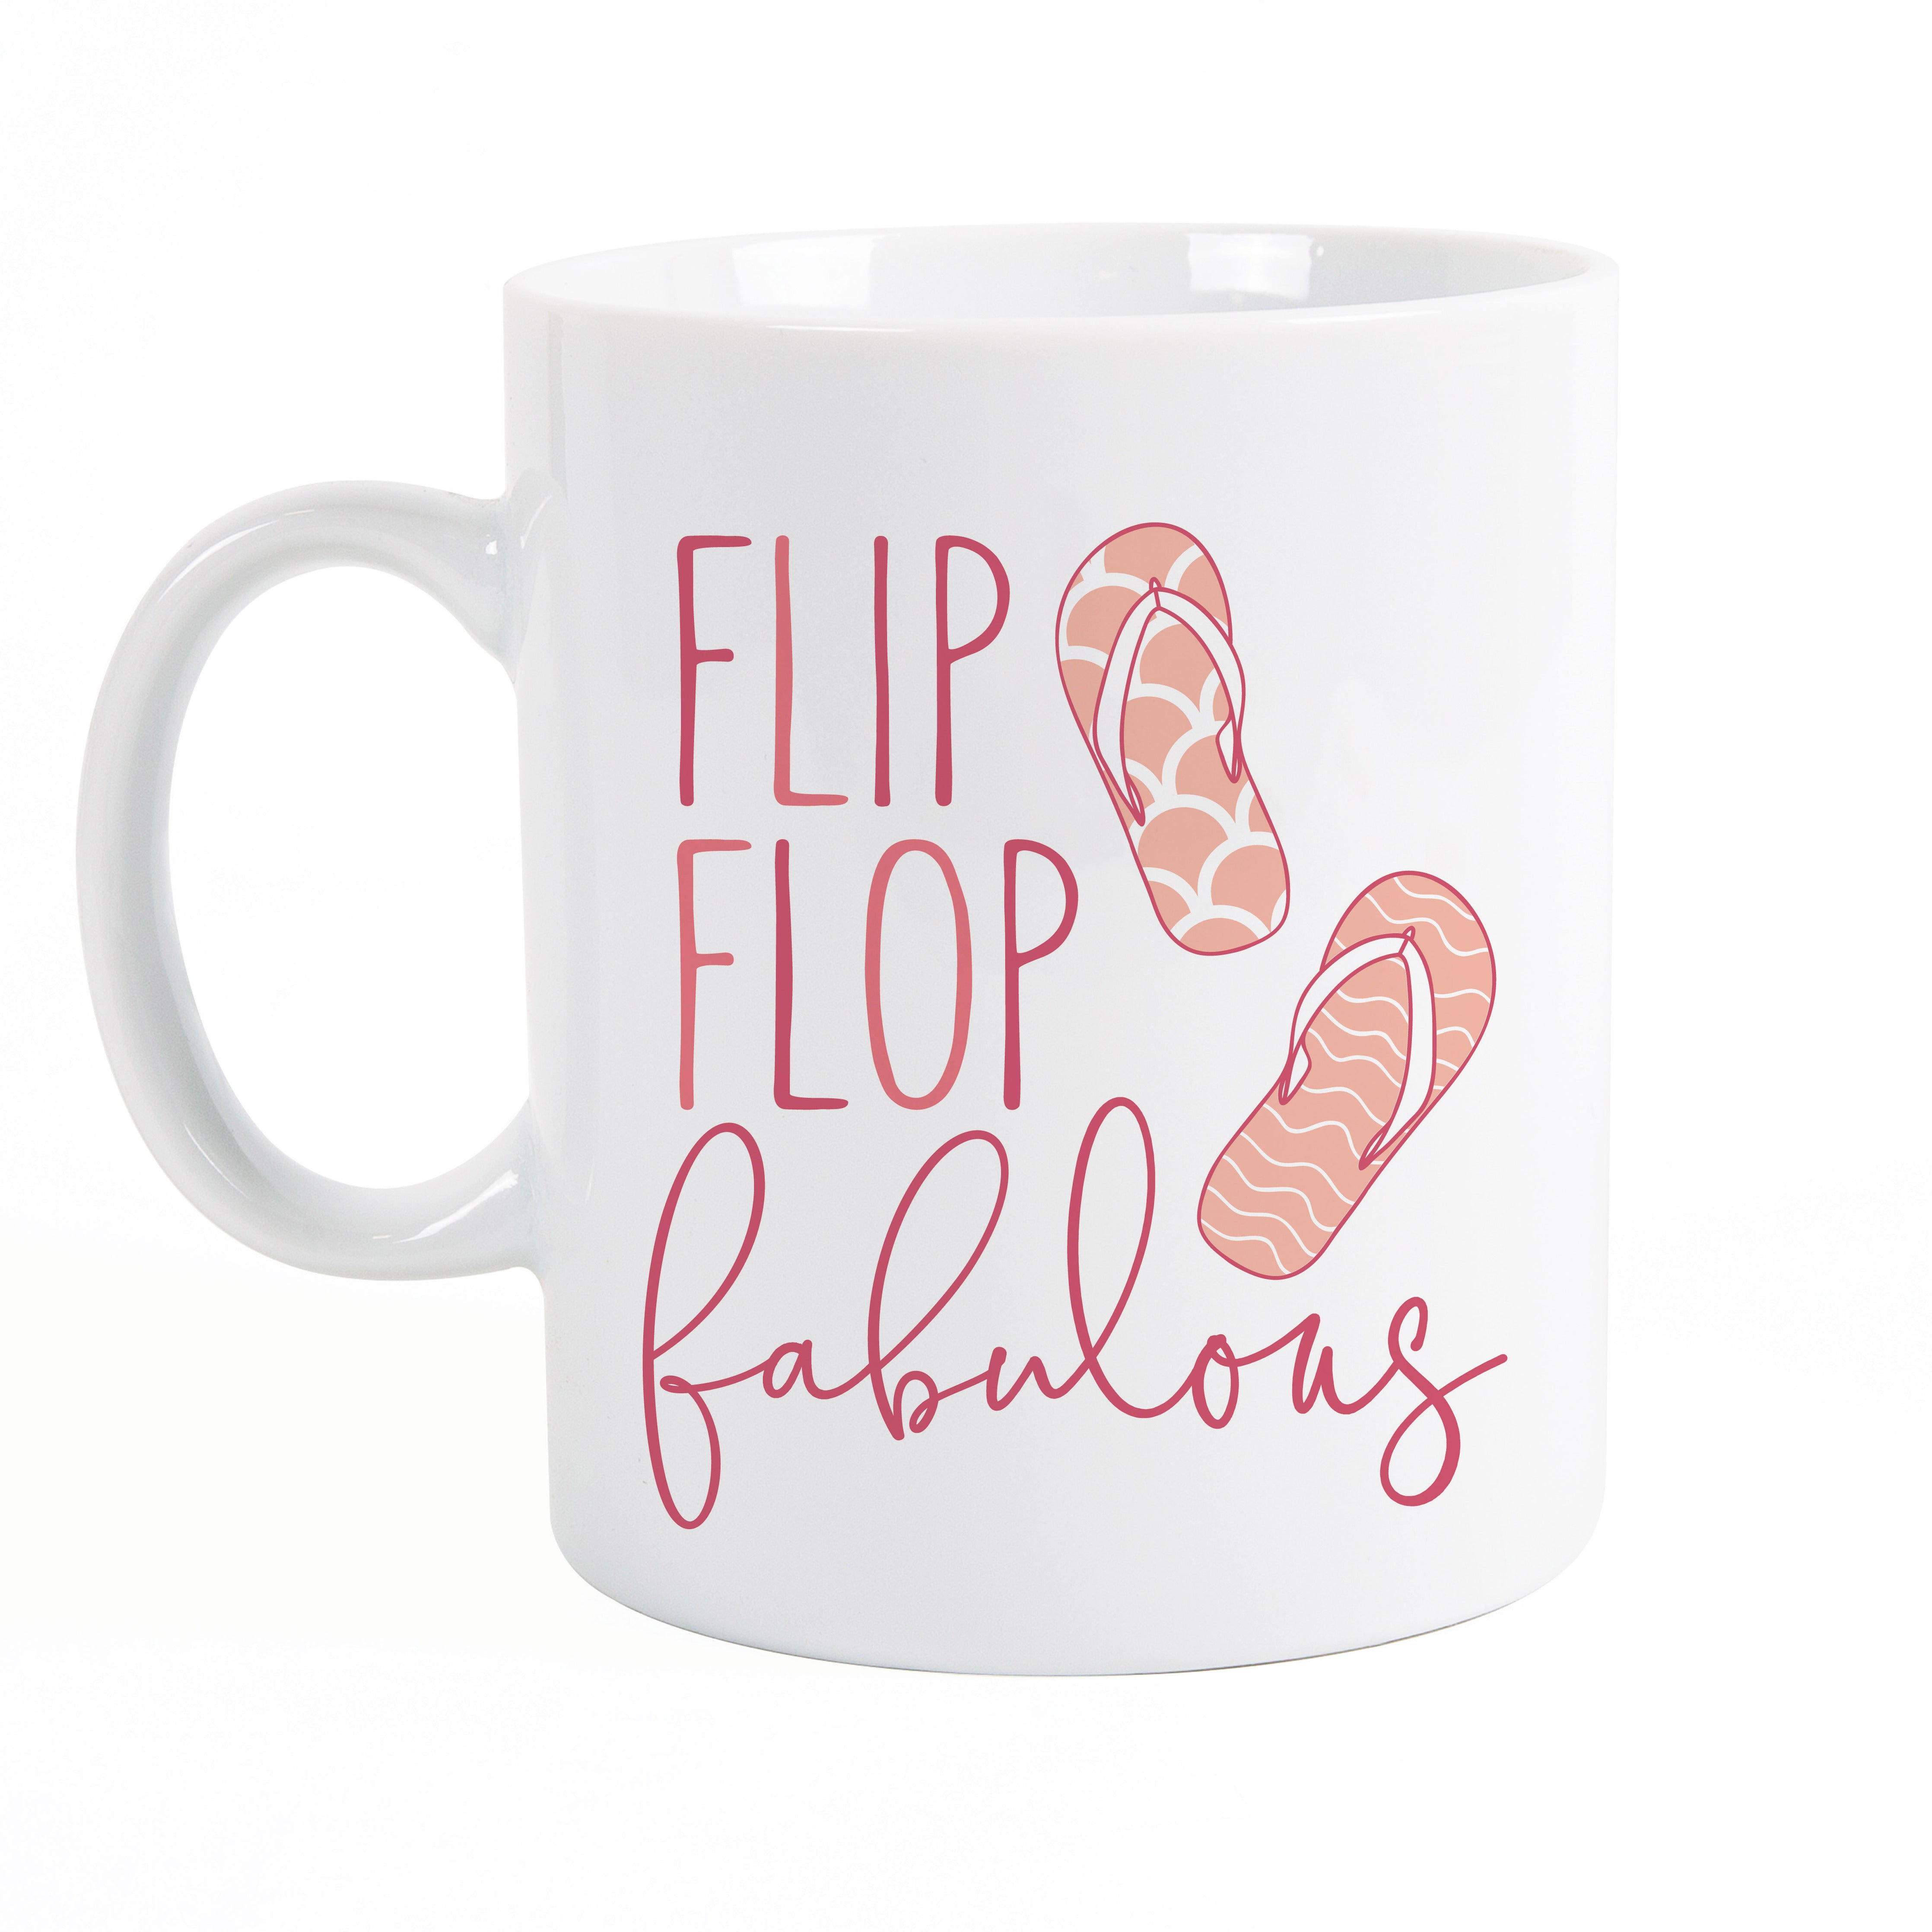 Flip Flop Fabulous Mug